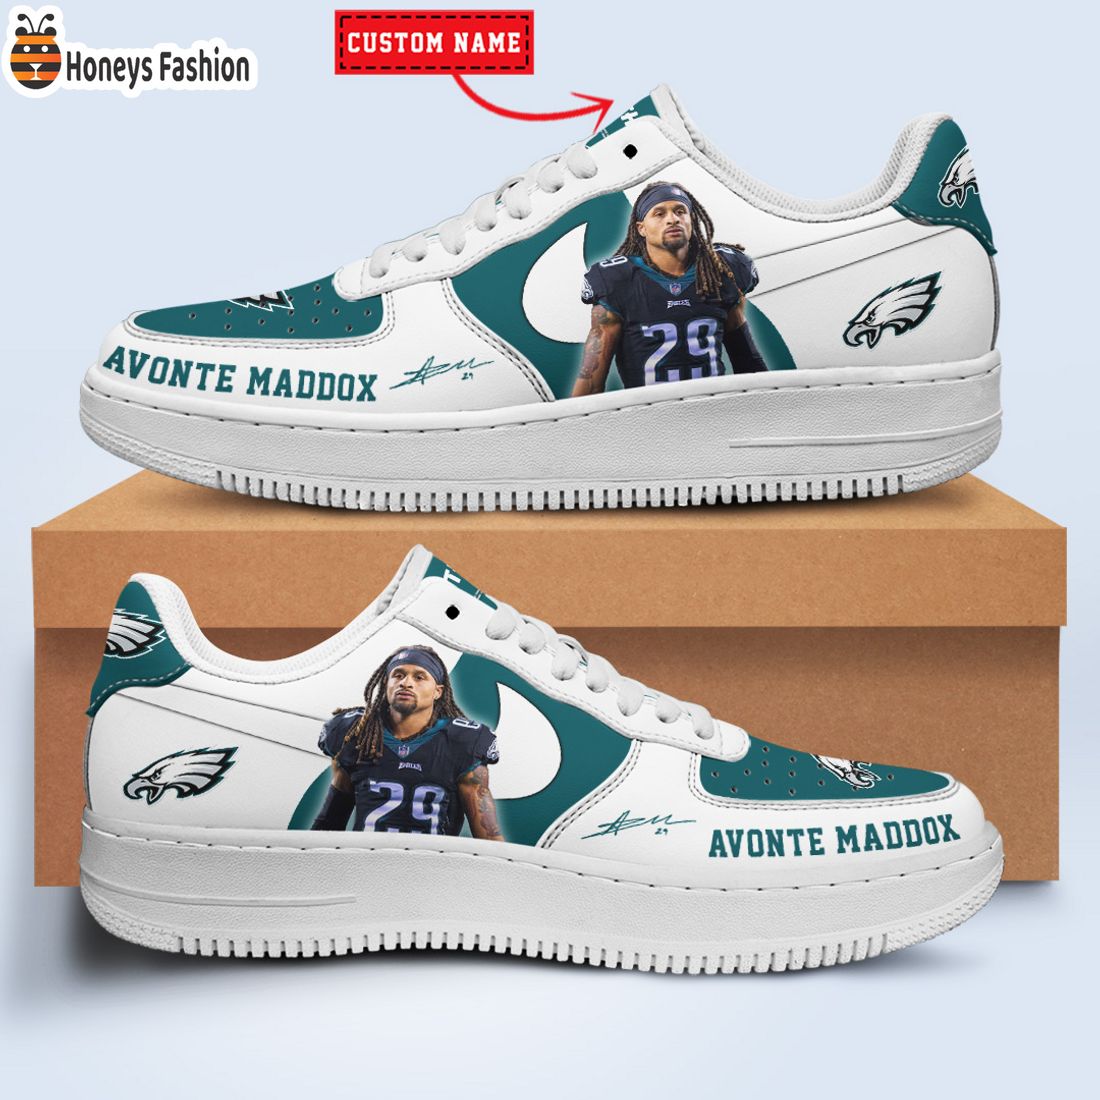 TOP SELLER Avonte Maddox Philadelphia Eagles NFL Custom Name Nike Air Force Shoes